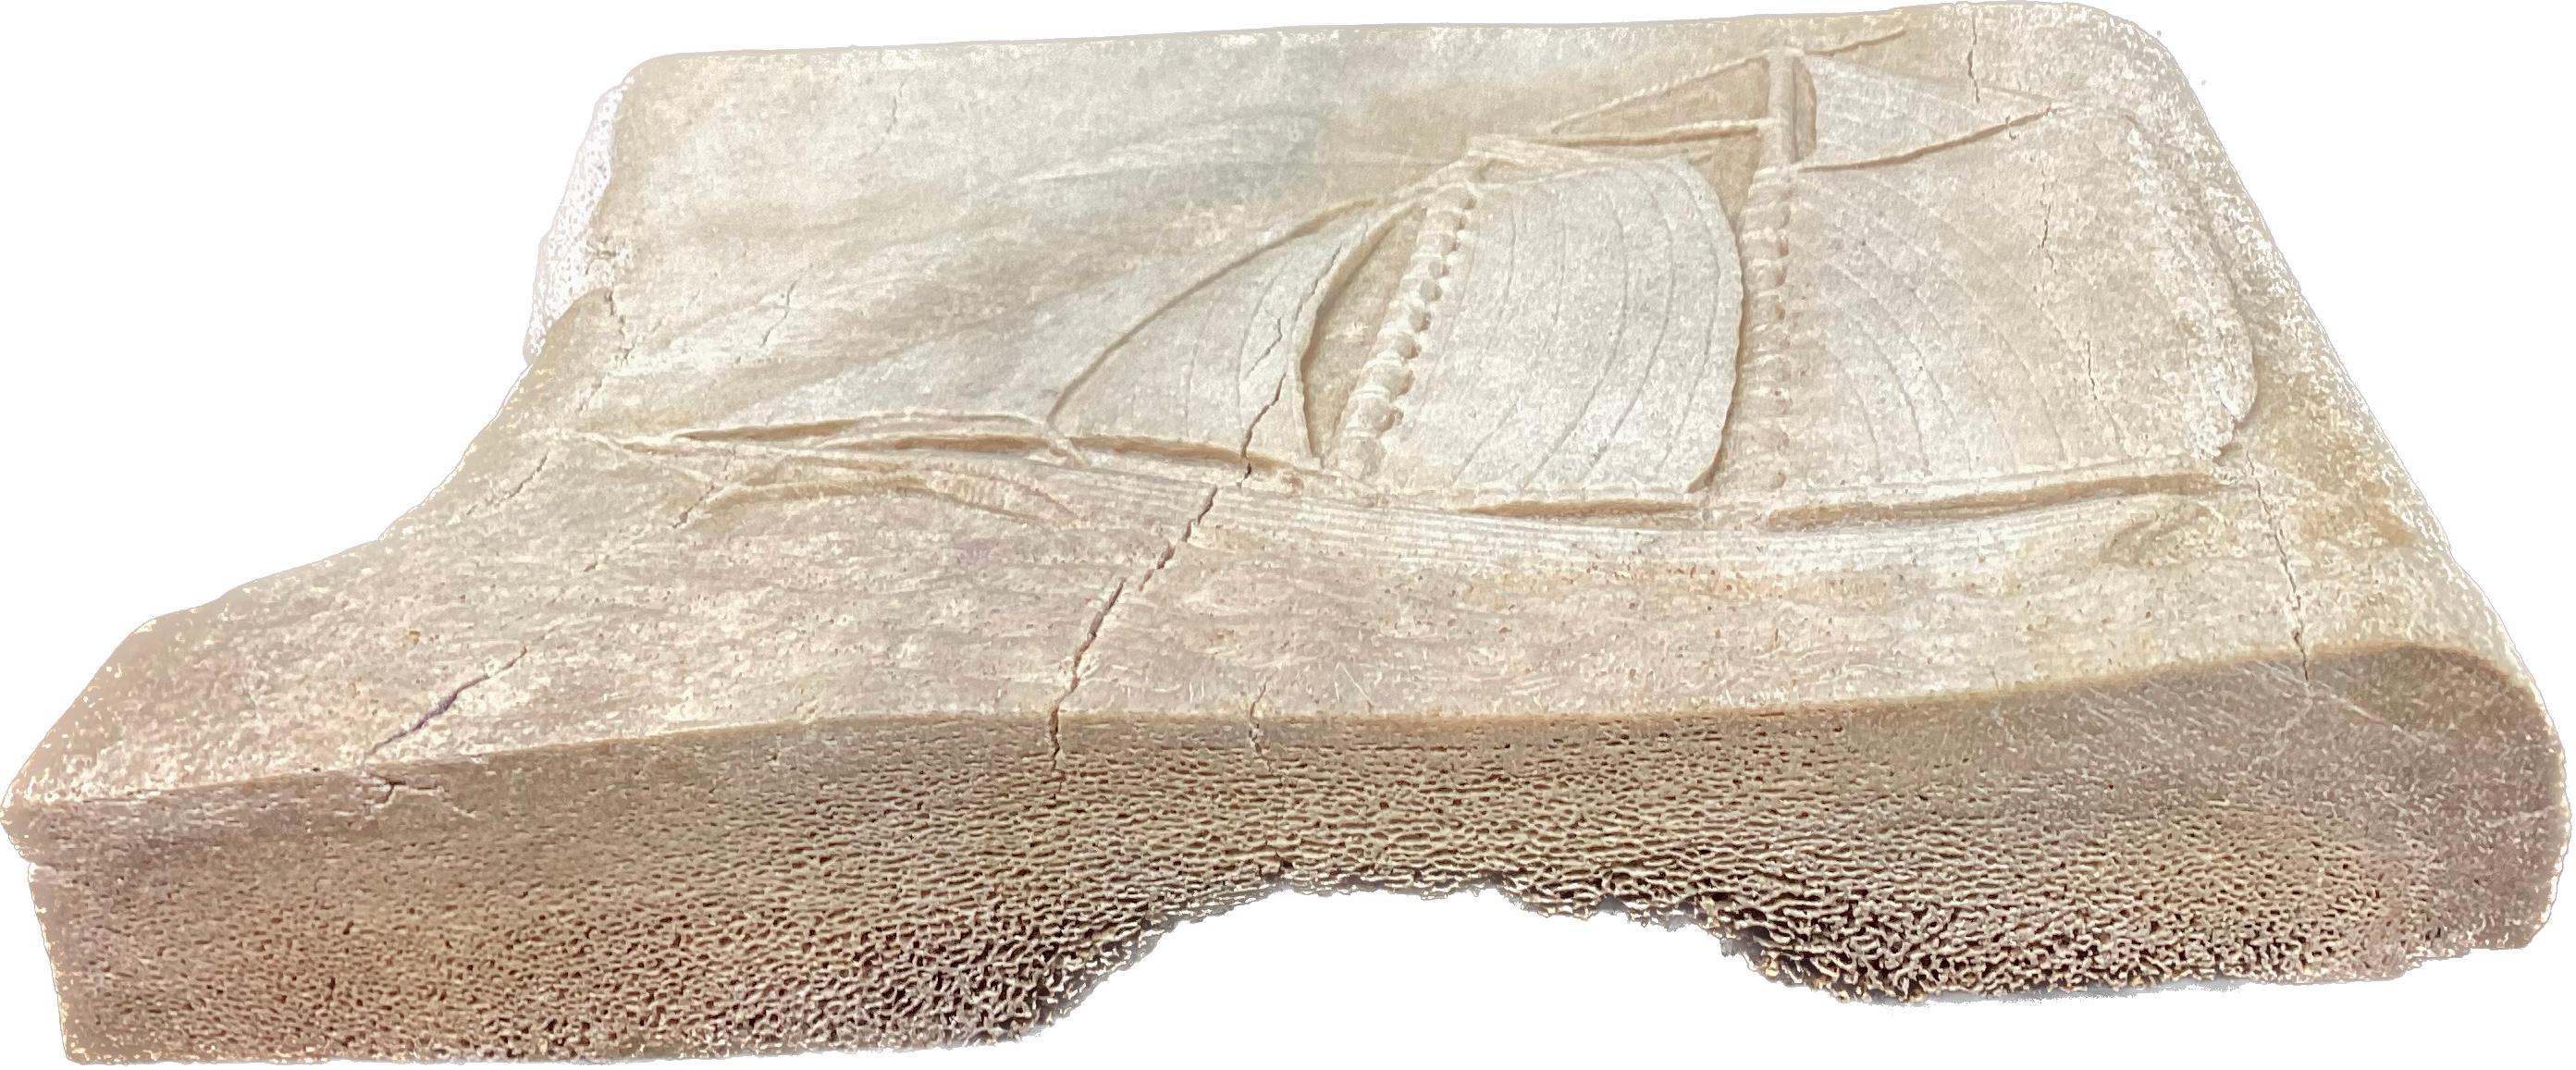 Inuit Fossilized Whale Bone Sculpture #13 For Sale 1